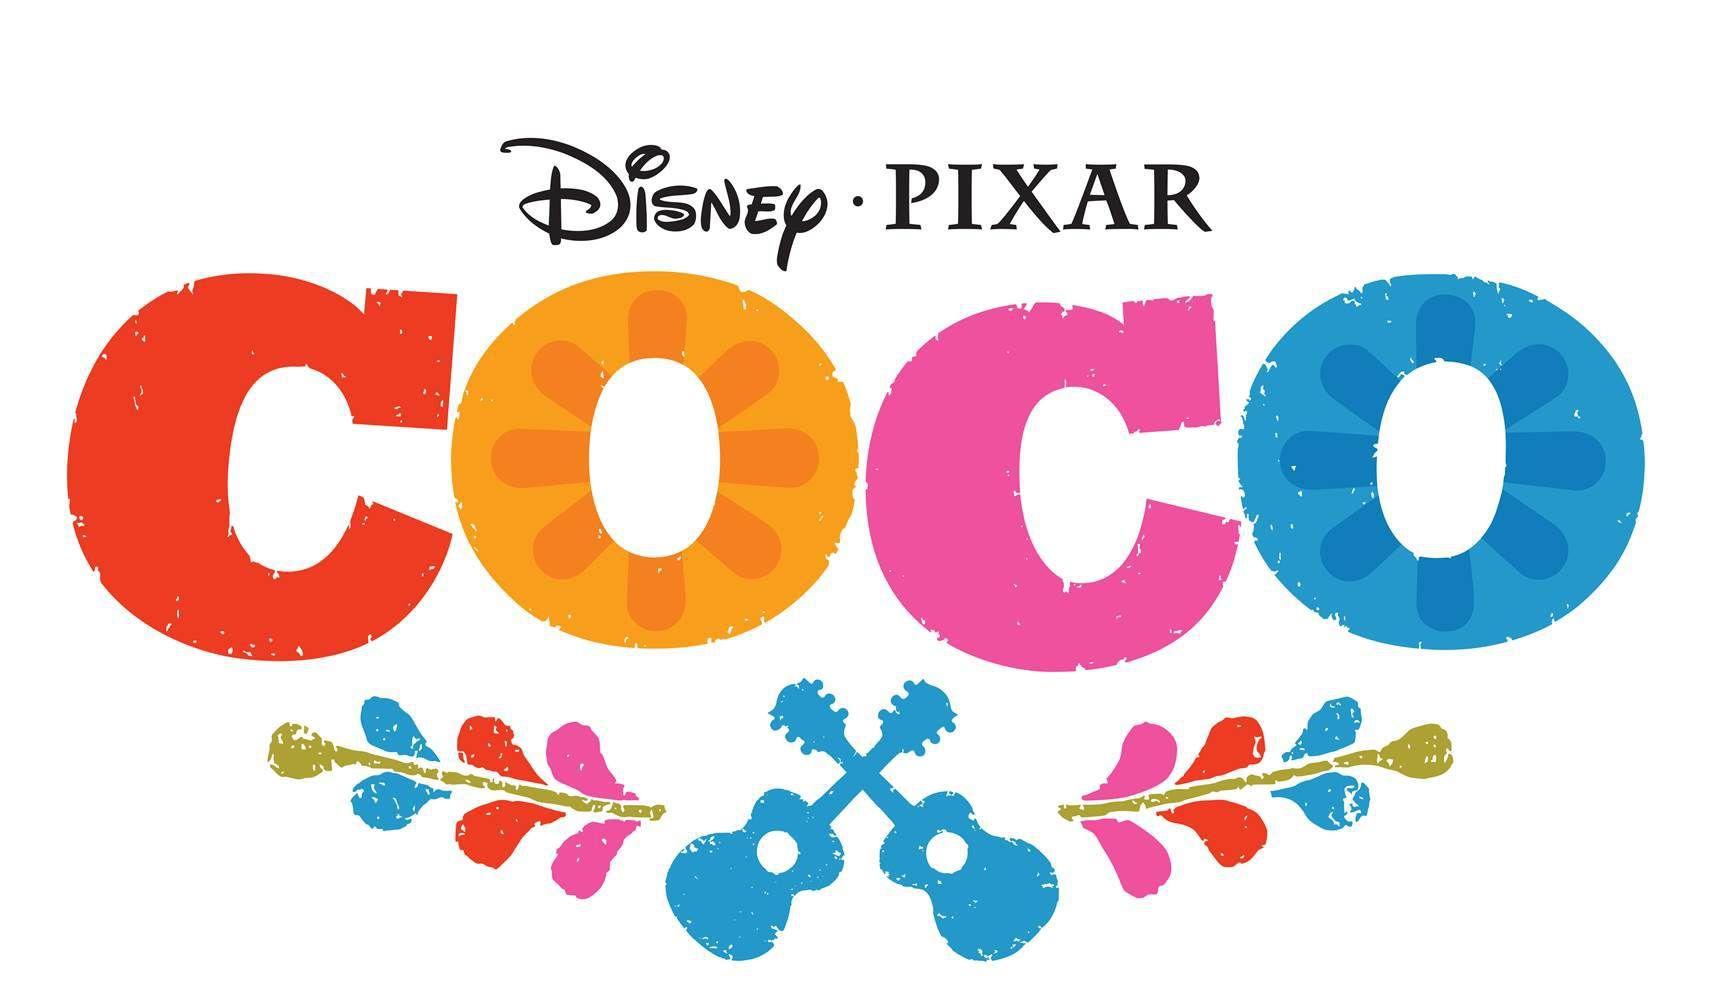 Disney Pixar Movie Logo - Coco Pixar Movie Logo | Movie Night - Coco | Pinterest | disney ...